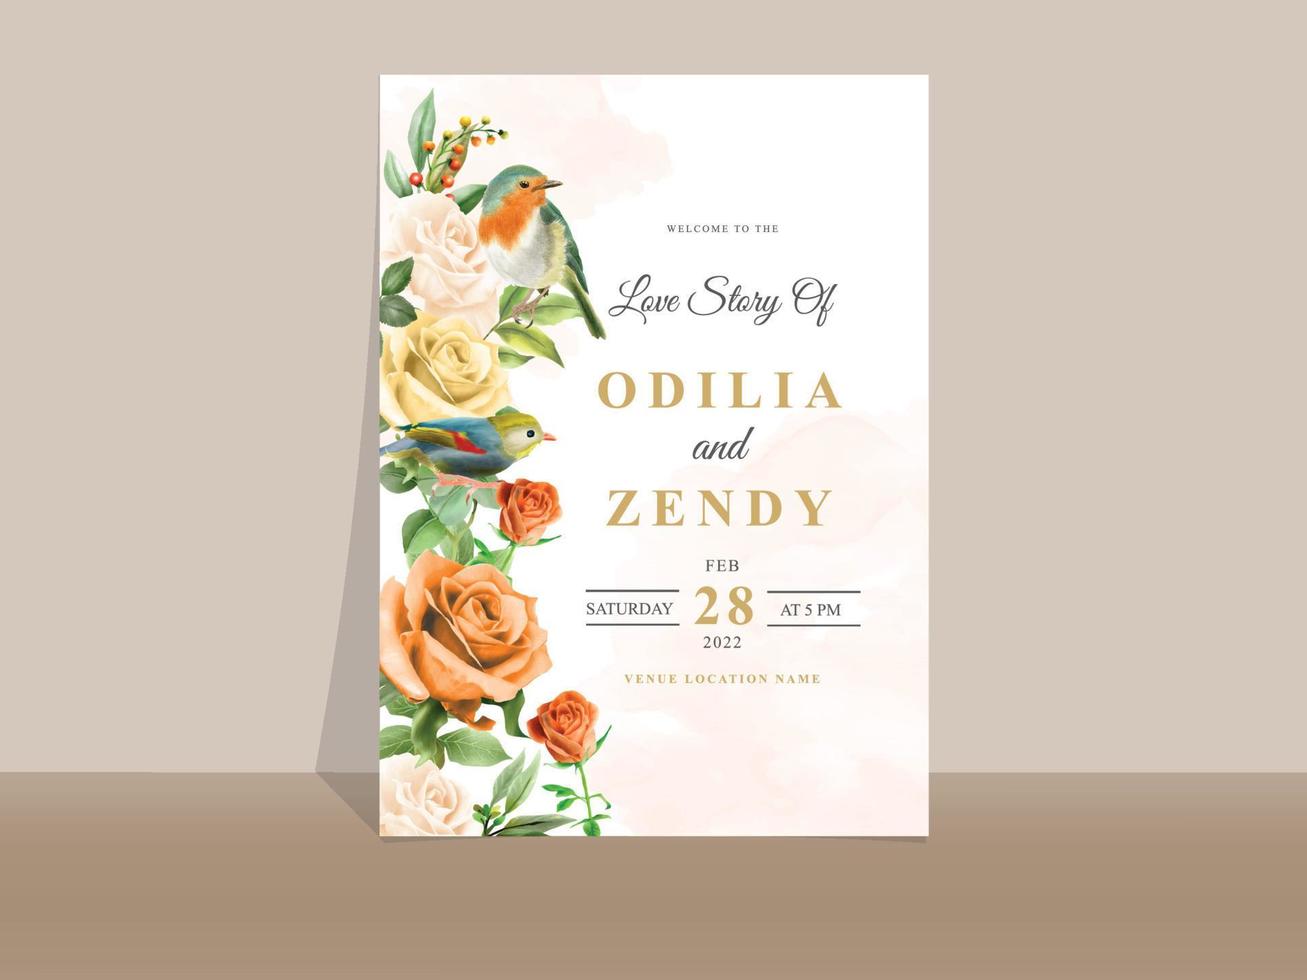 Elegant yellow and orange floral wedding invitation card vector